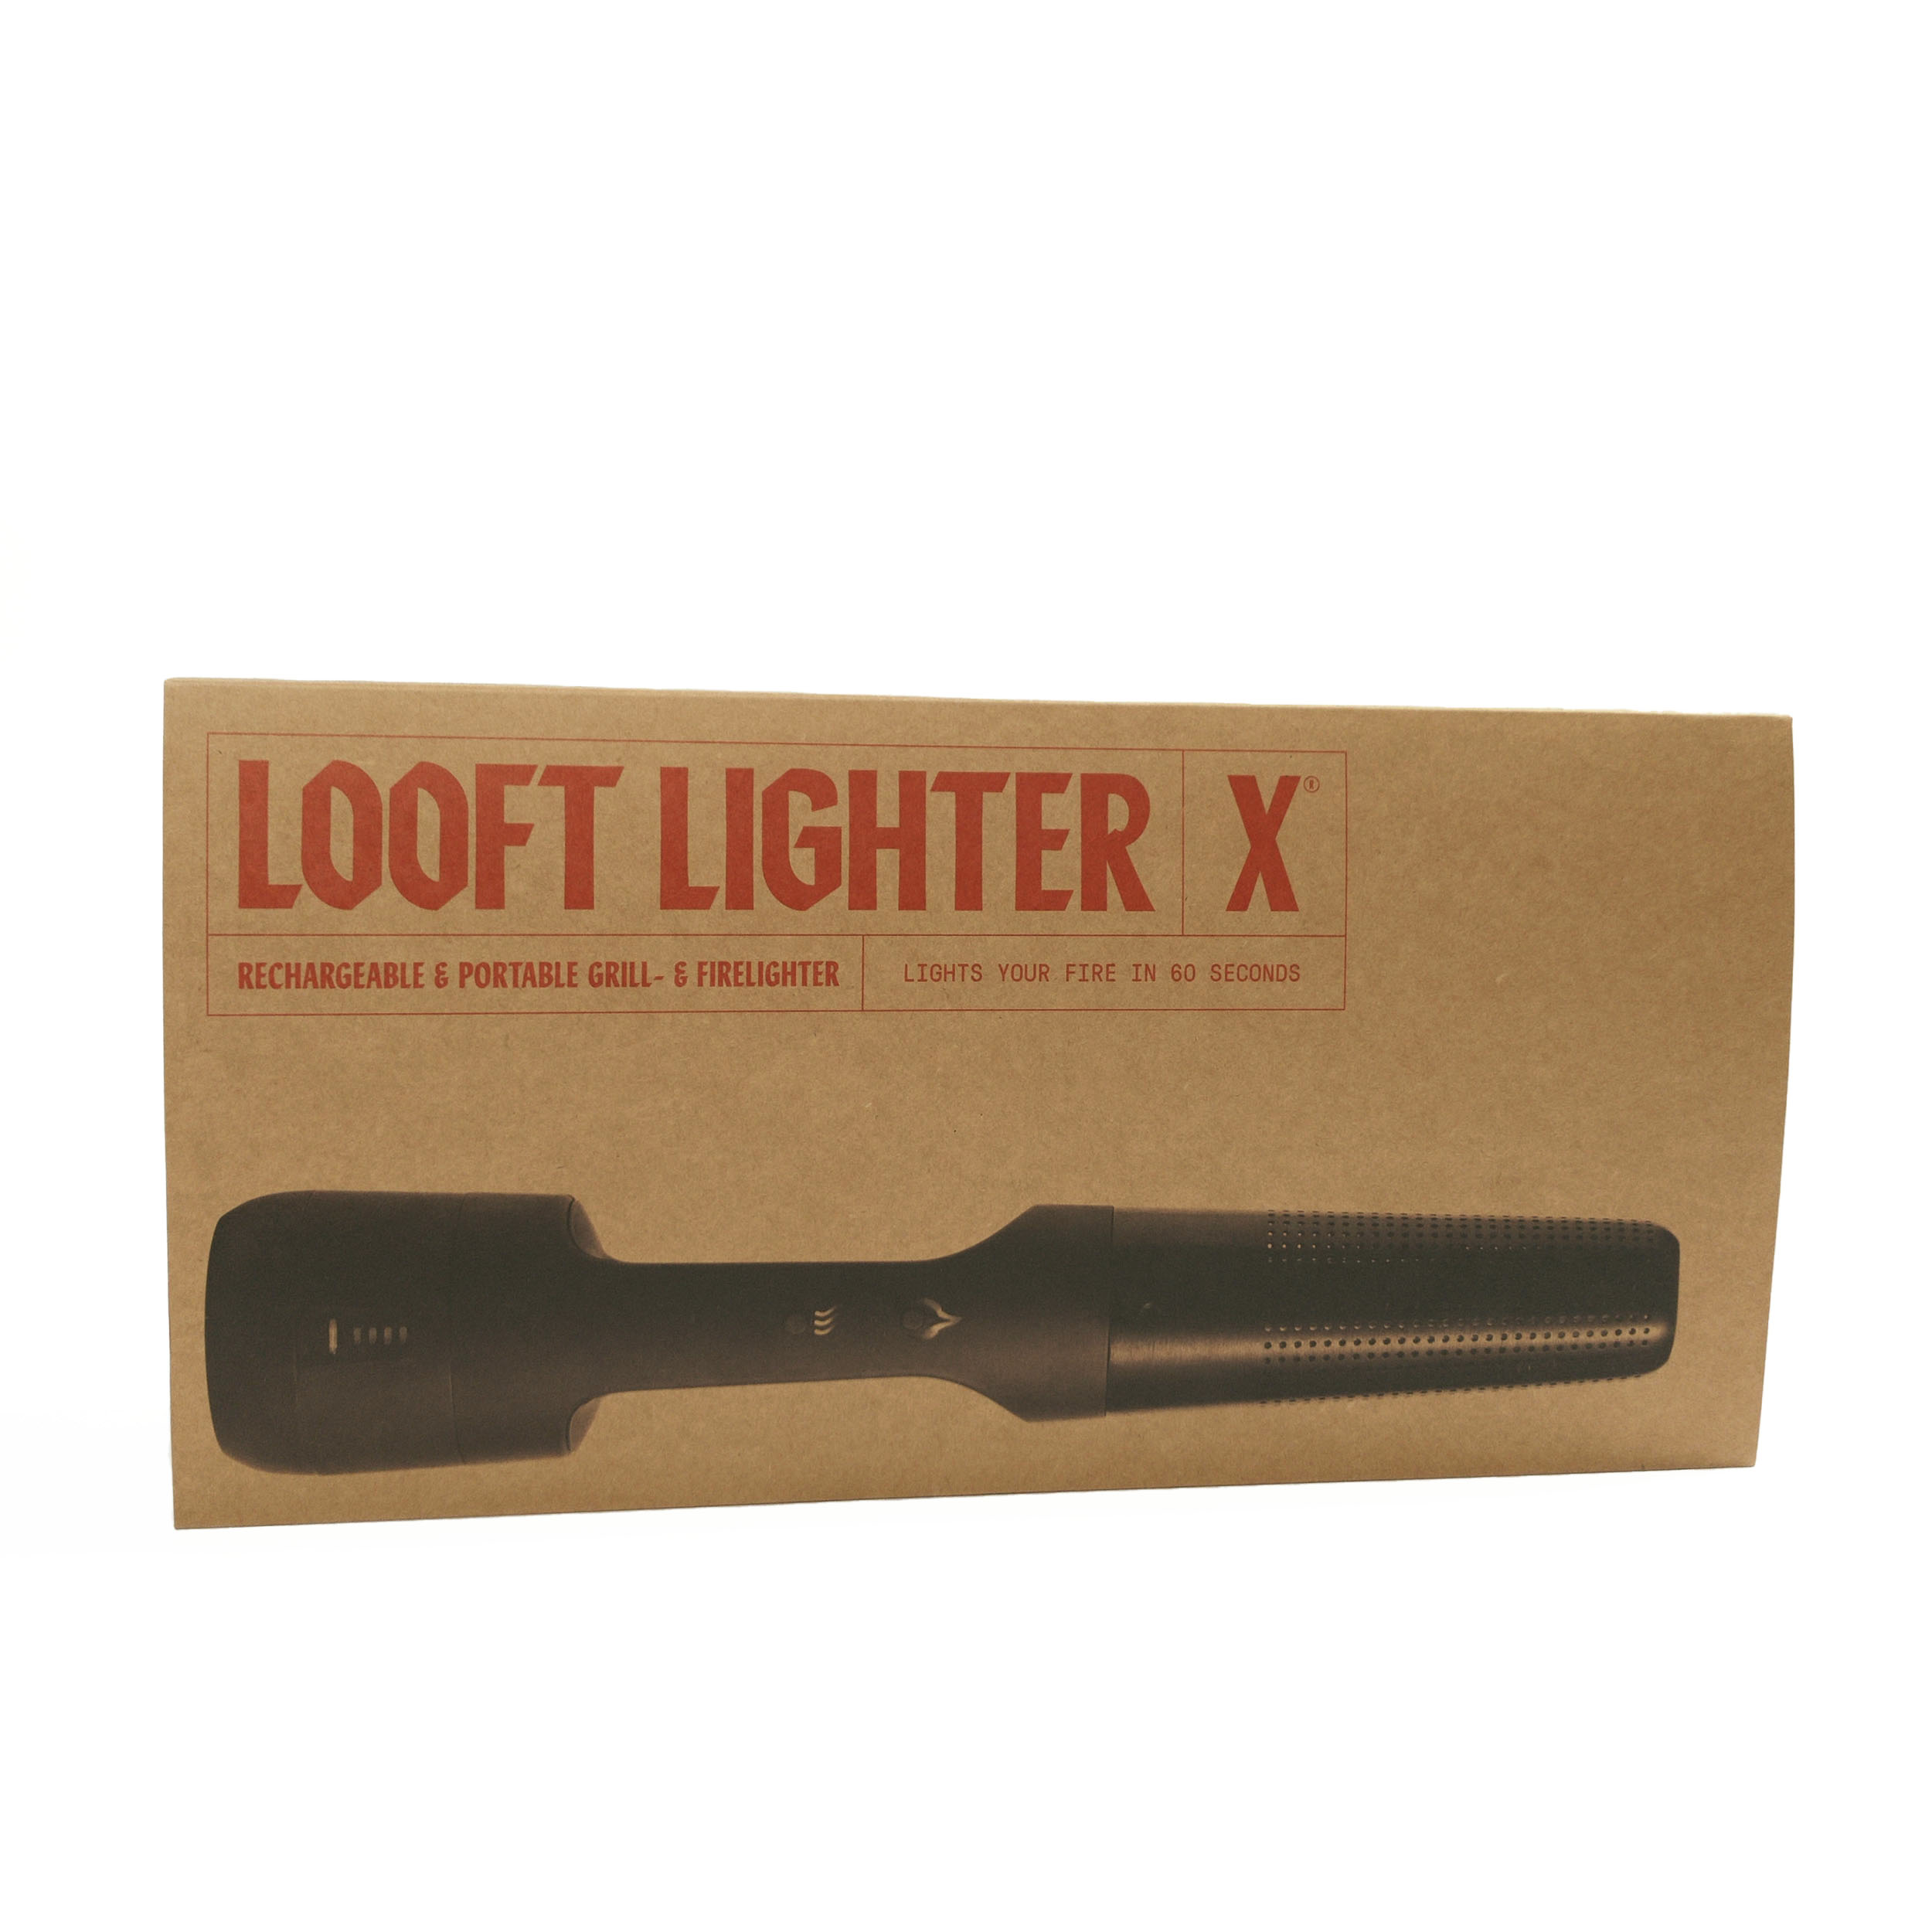 Looftlighter X Grillanzünder 